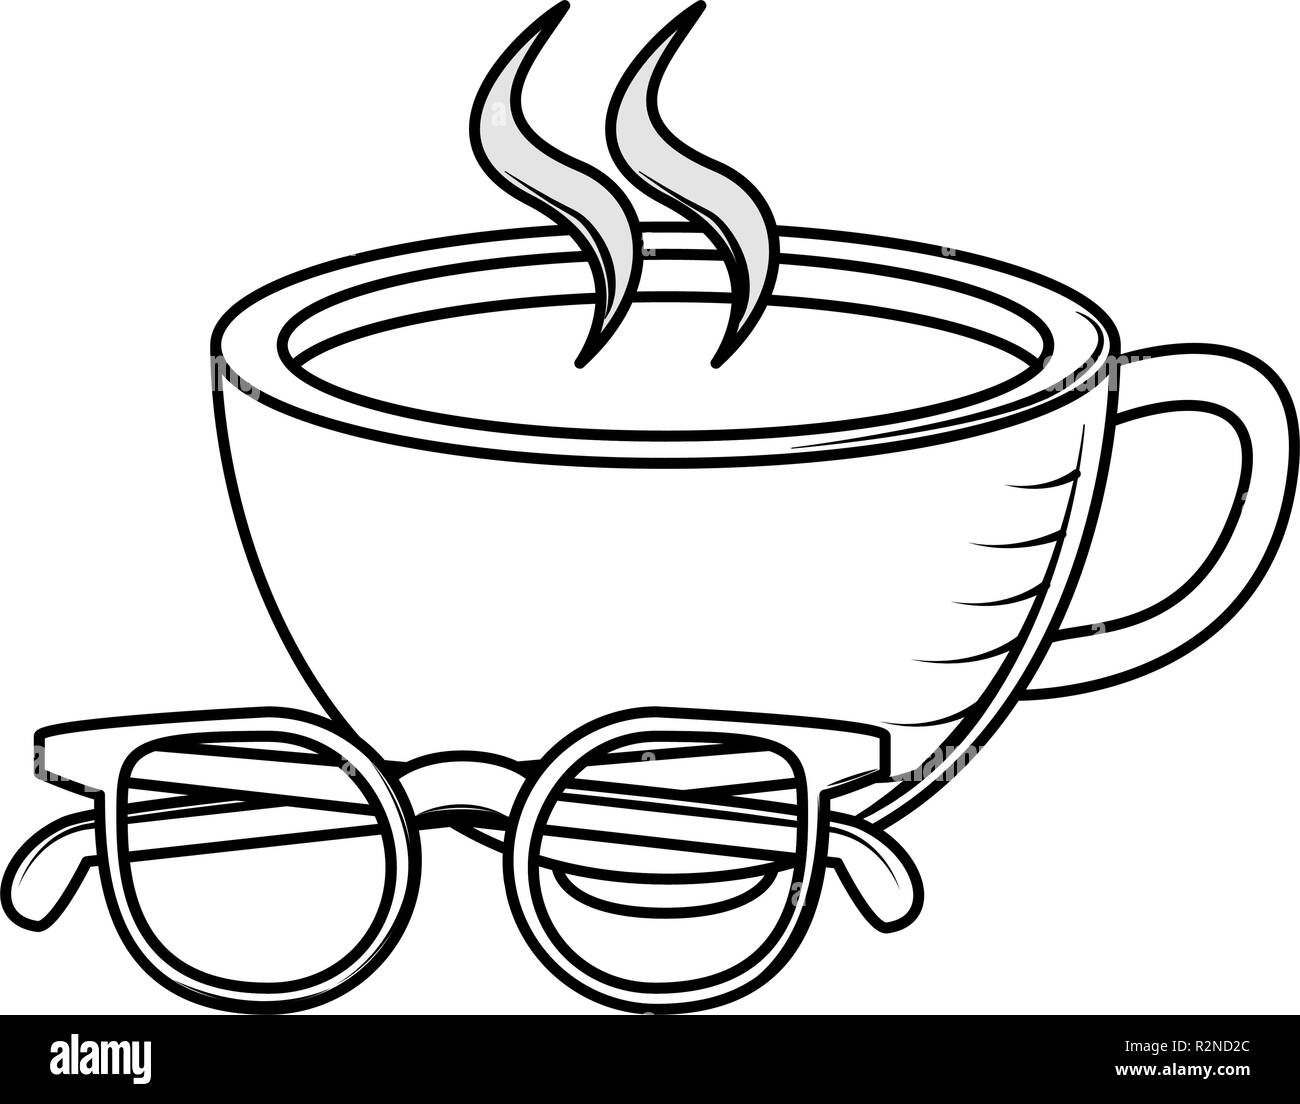 Kaffeetasse Und Sonnenbrille Cartoon Vector Illustration Graphic Design Stock Vektorgrafik Alamy